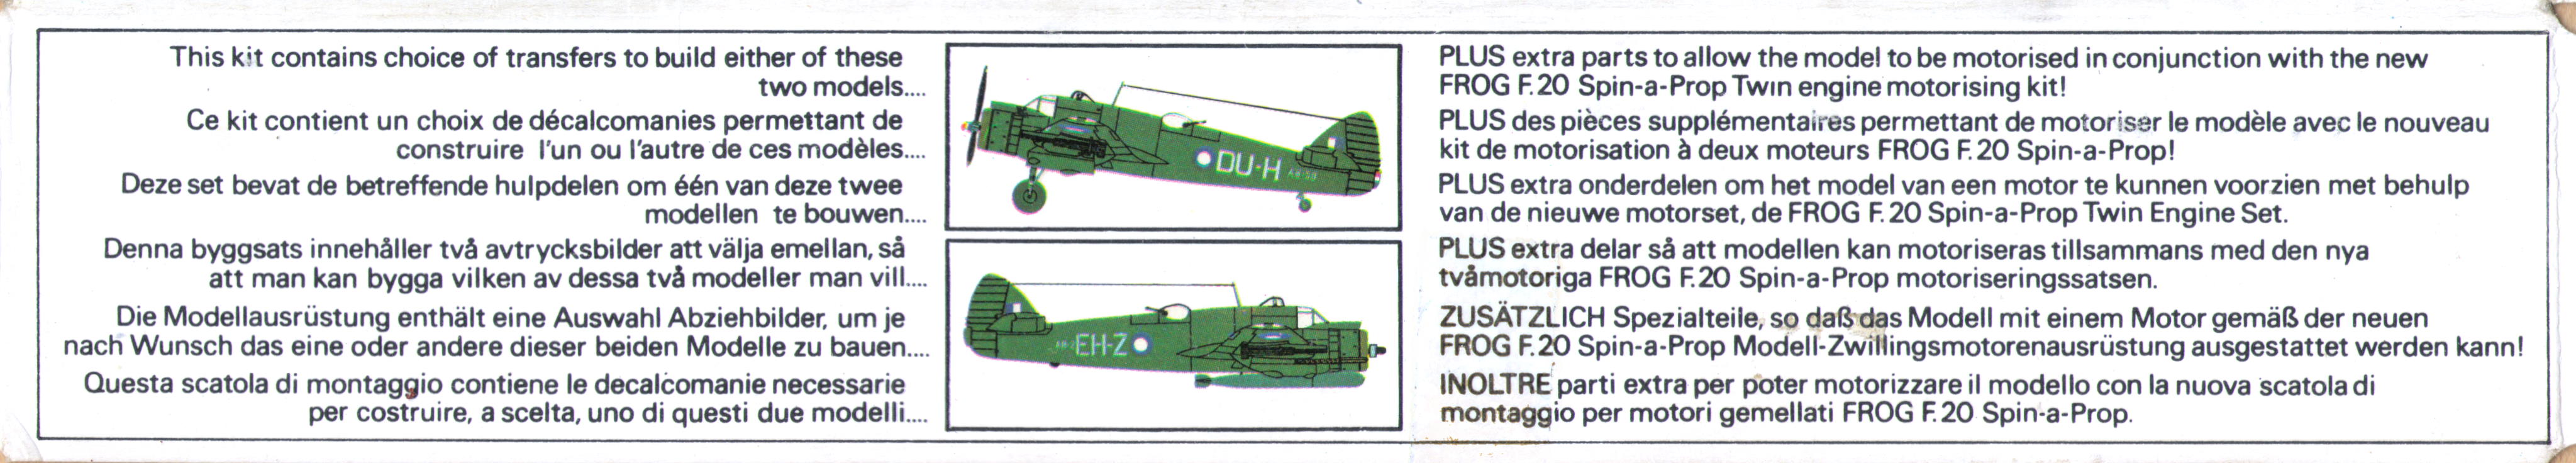 Стенка коробки Моторизация и варианты FROG F291 Beaufighter Mk.21 Anti-shipping Strike Fighter